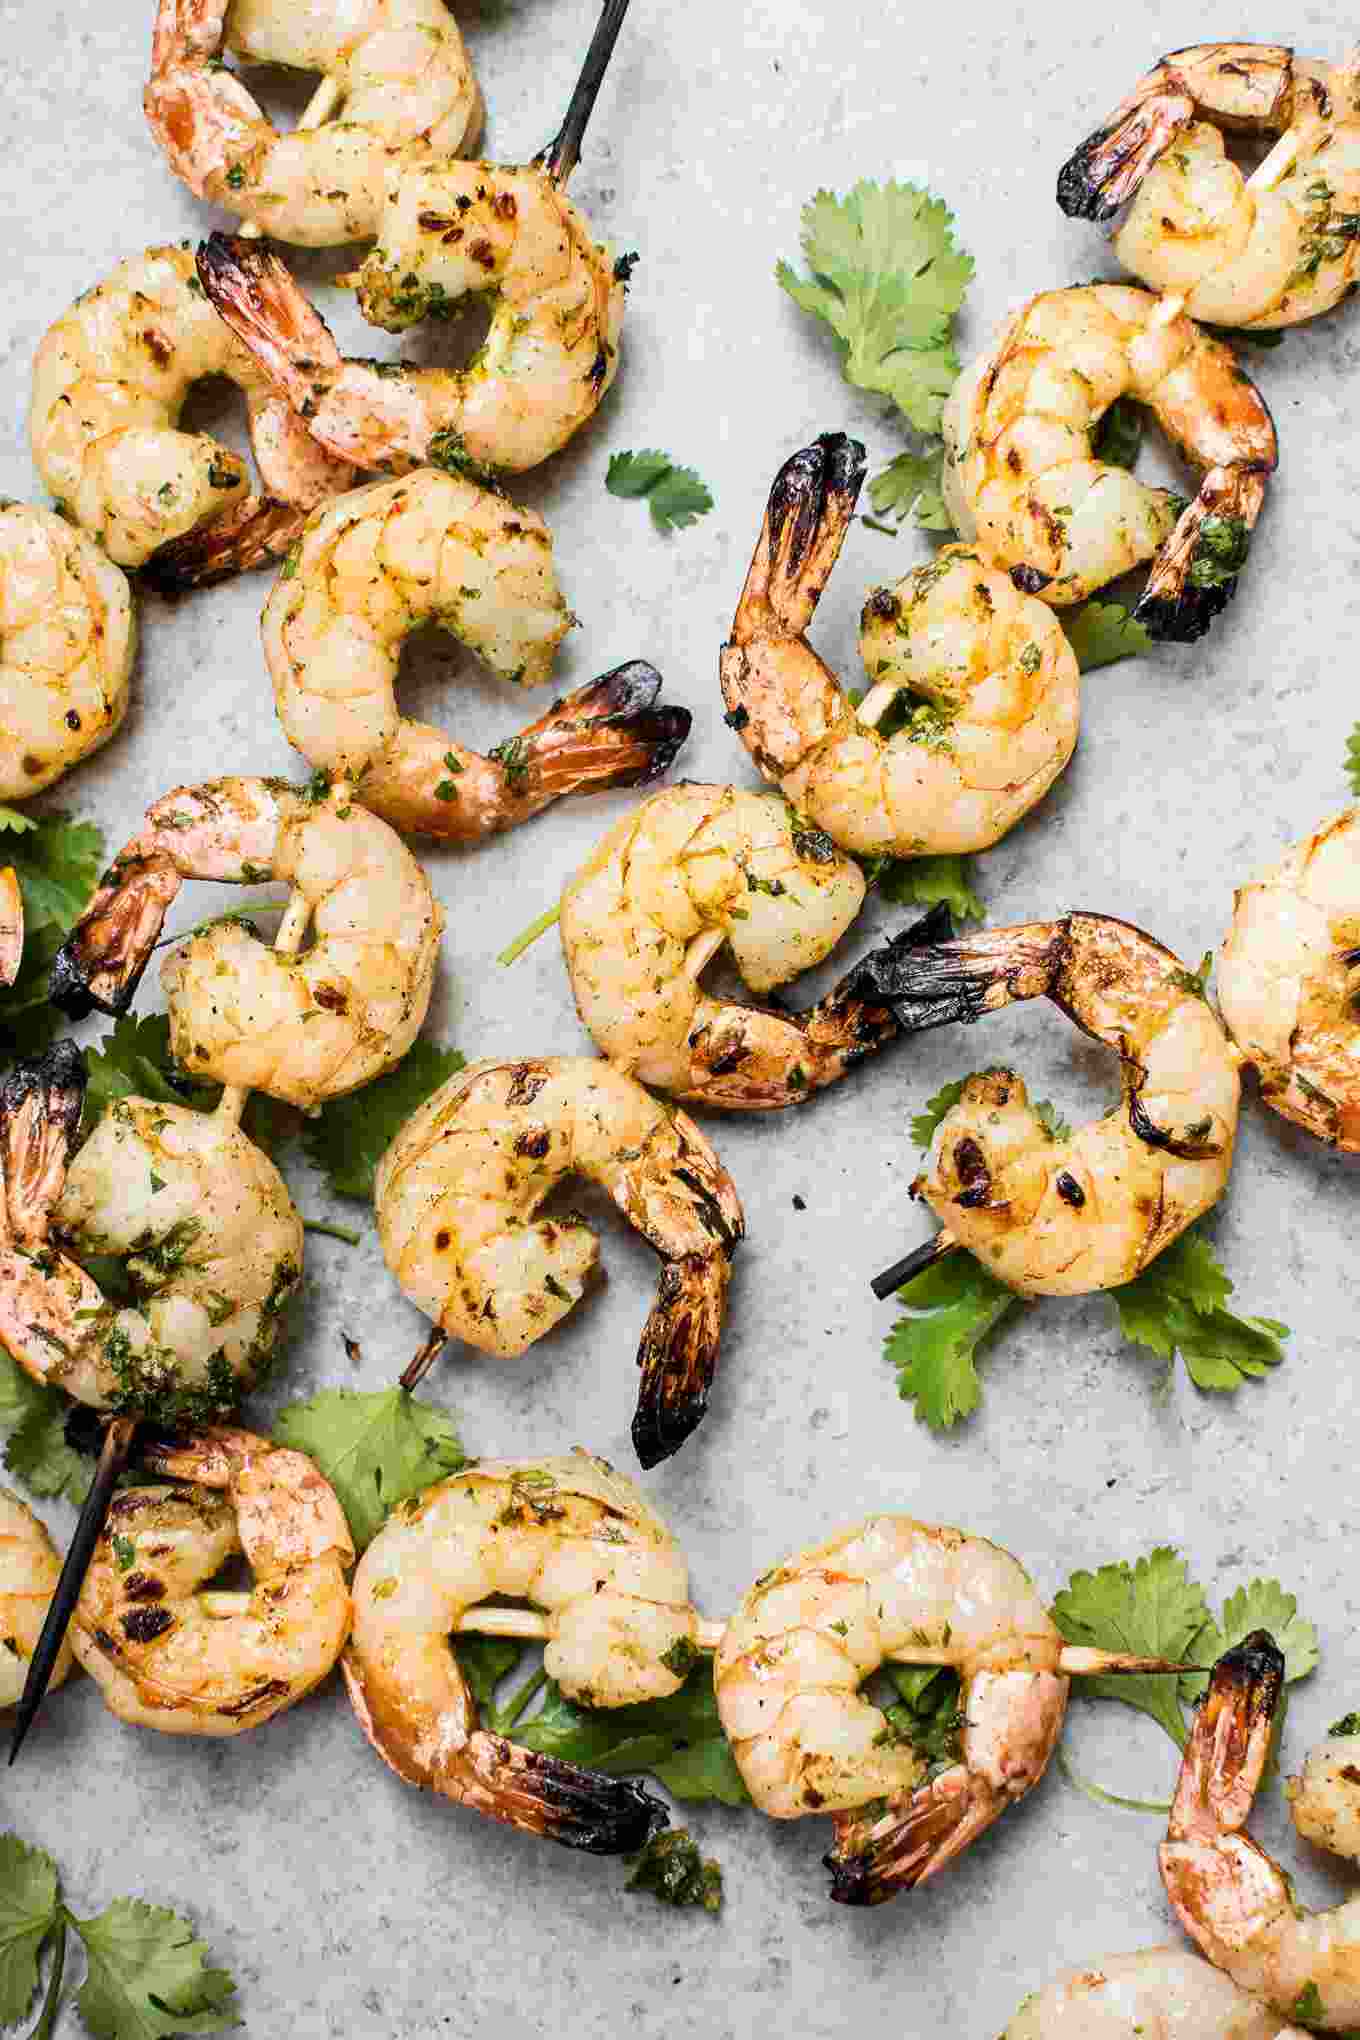 Shrimps Mirrored Recipes Limits Parsley Dressing Healthy Summer Sight